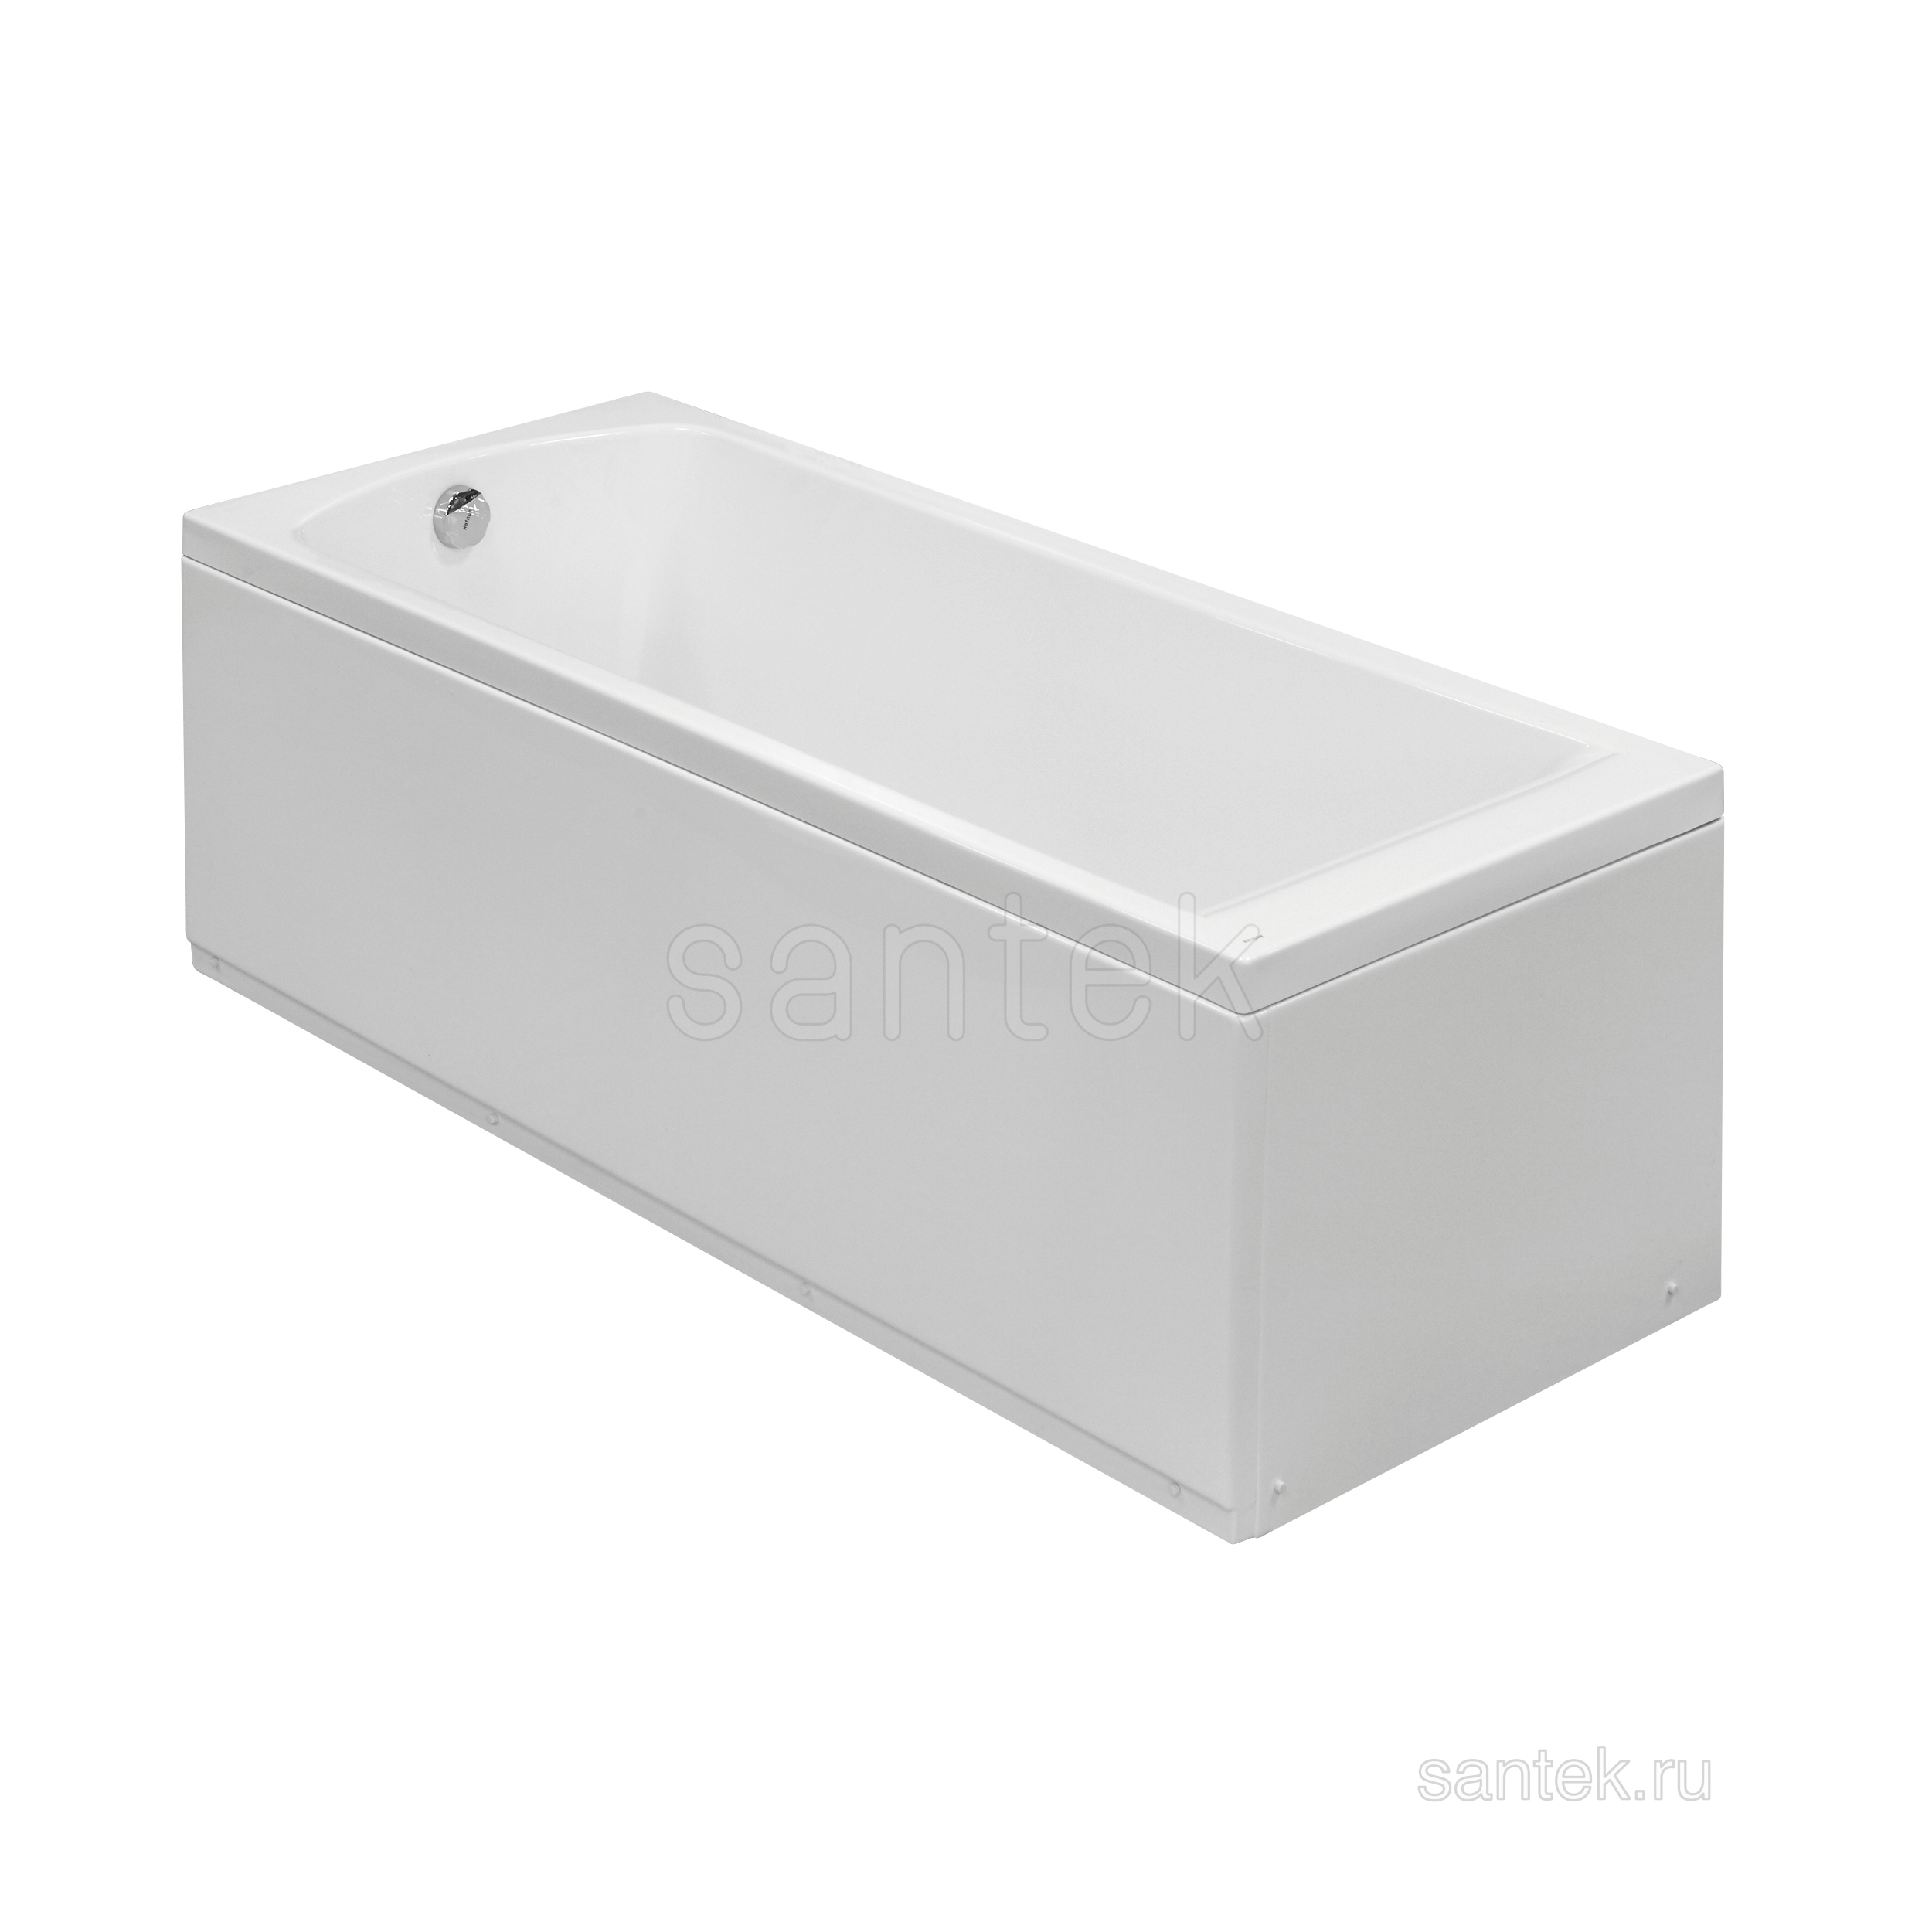 Акриловая ванна Santek Фиджи 180х80 прямоугольная 1WH501706